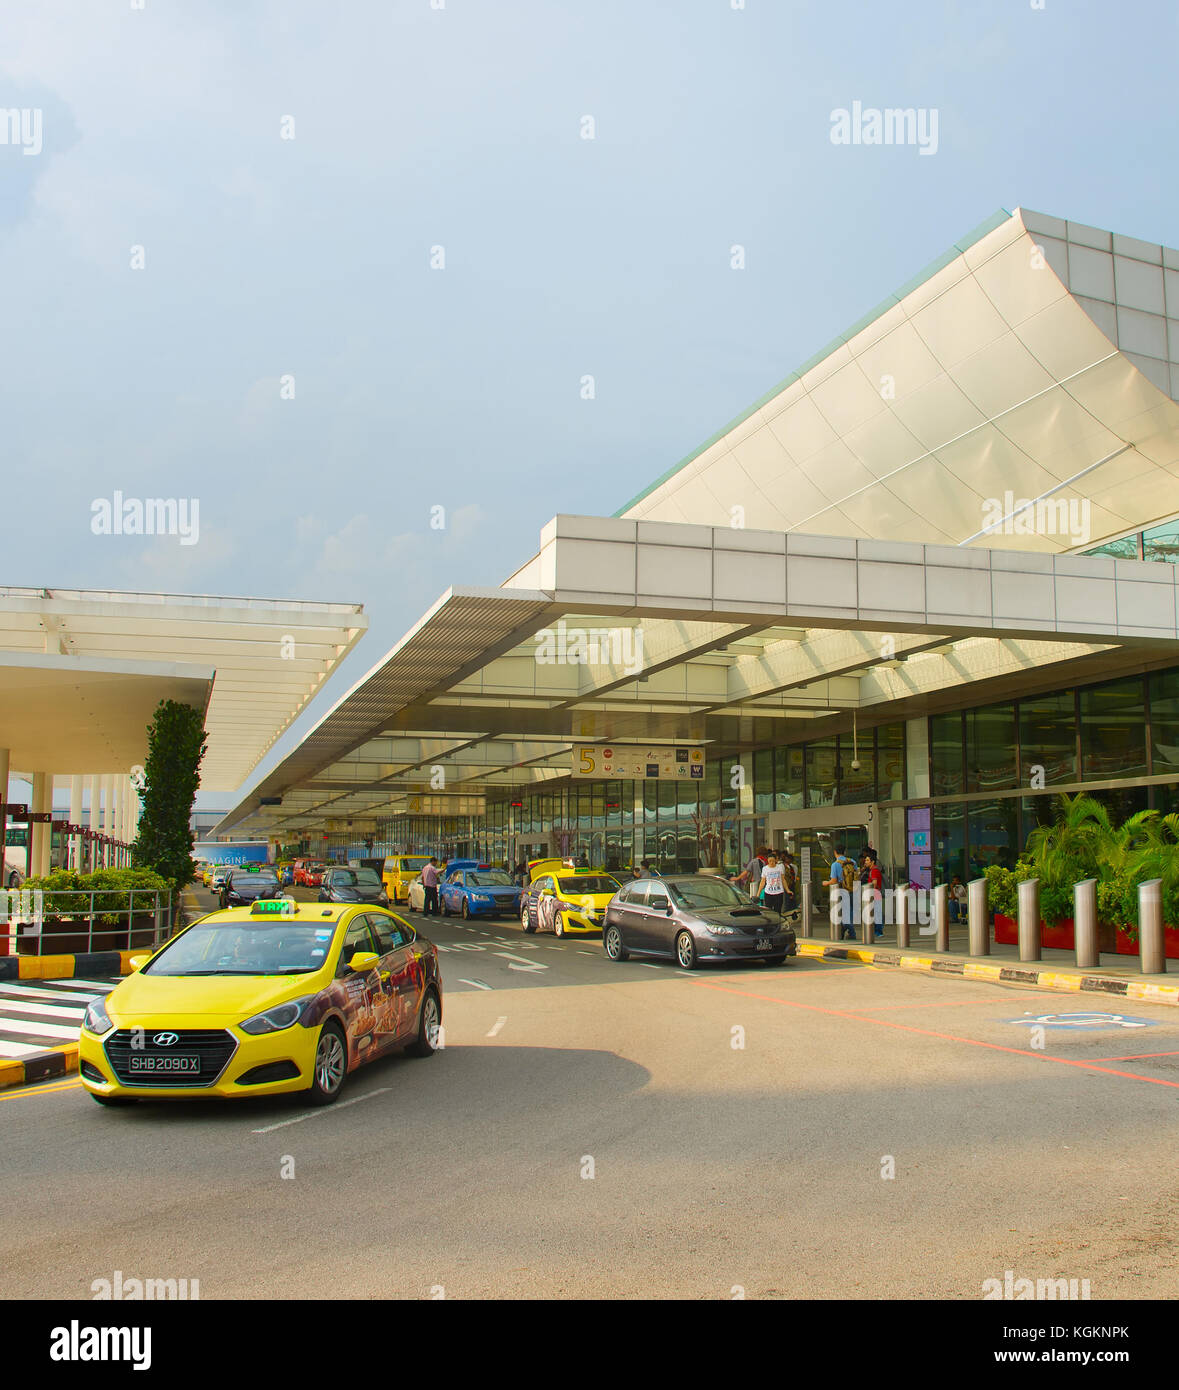 Blaues taxi singapur -Fotos und -Bildmaterial in hoher Auflösung